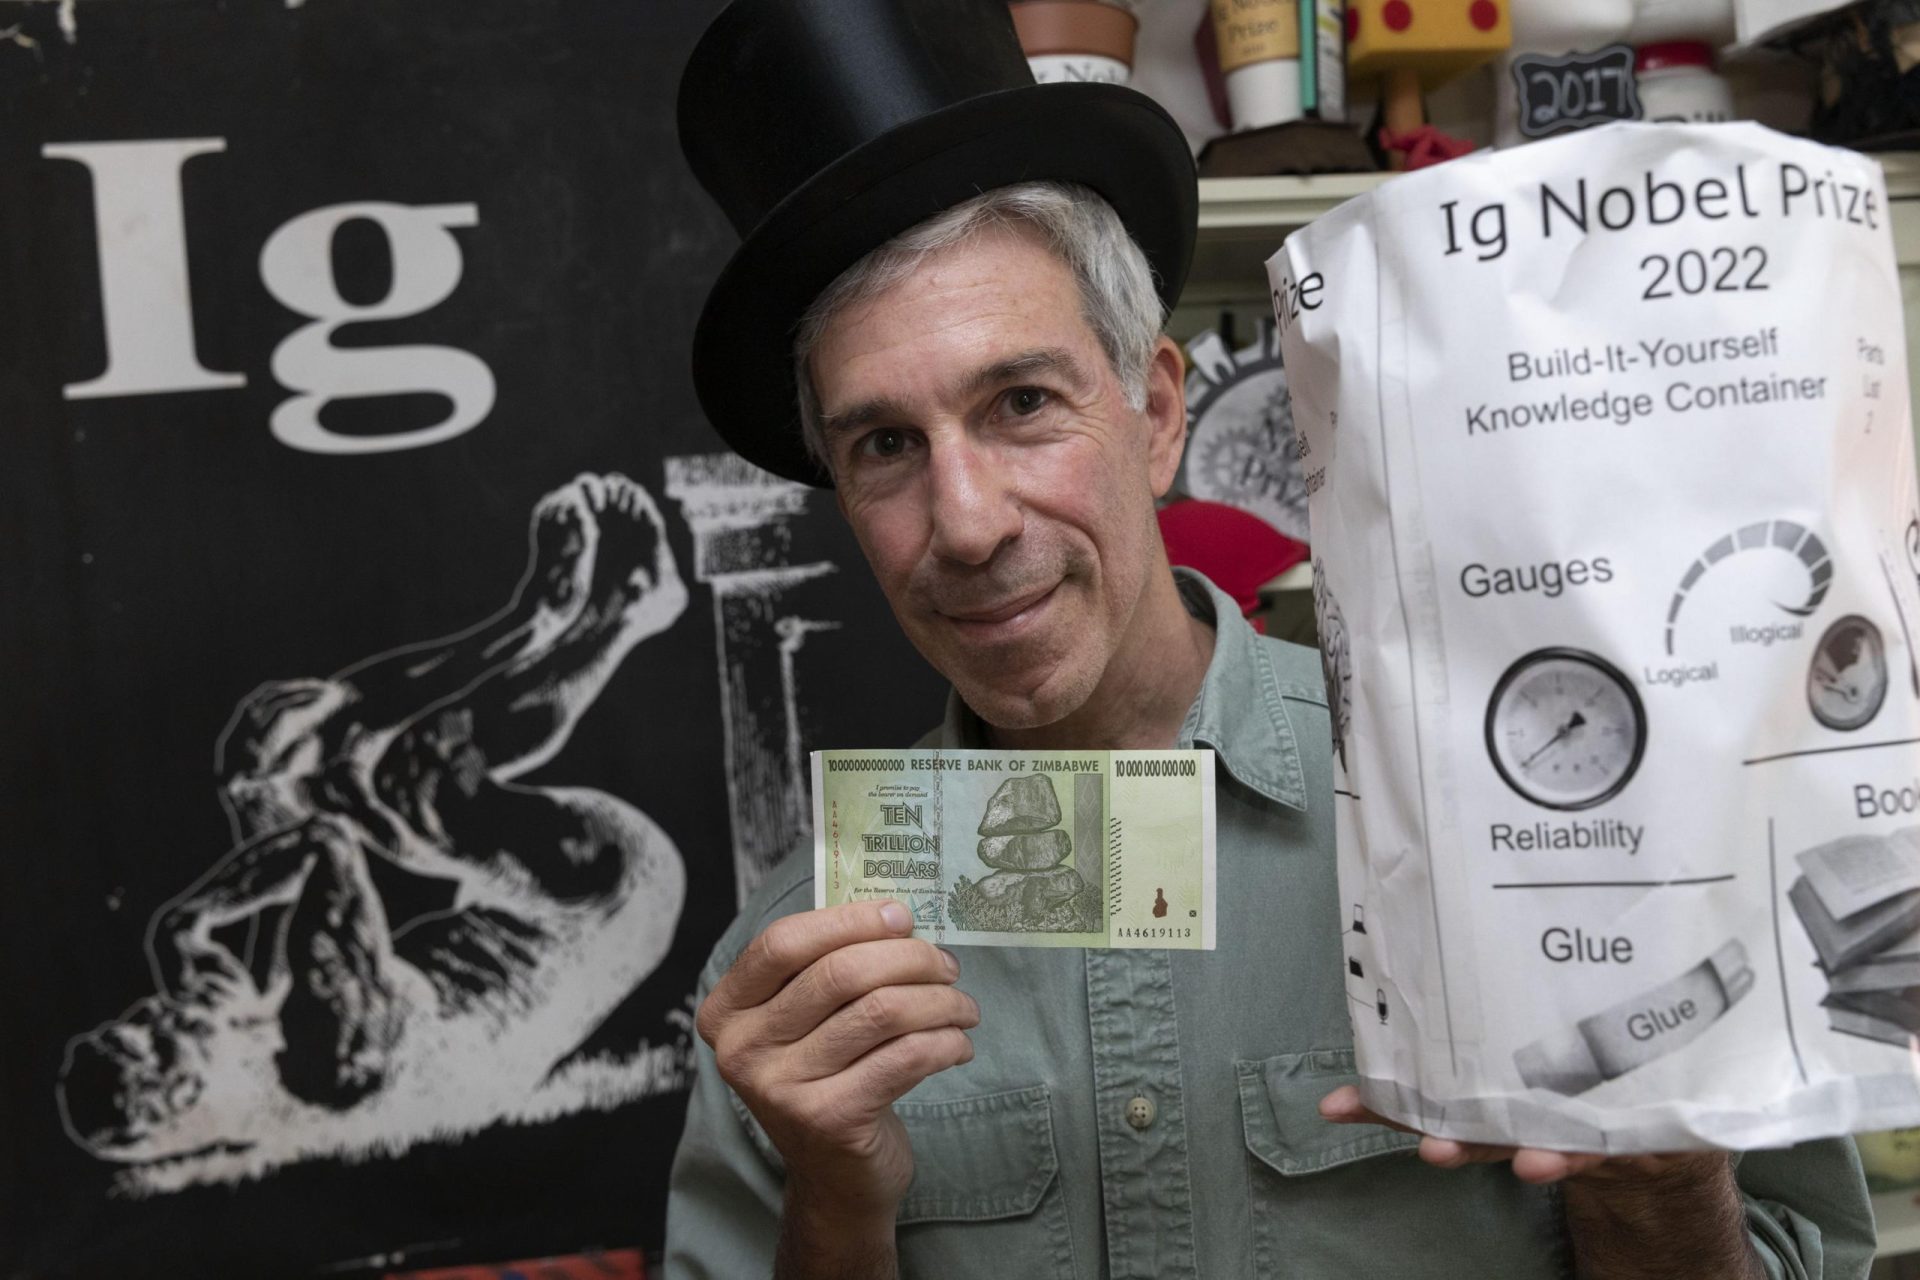 Escorpiones estreñidos, amor a primera vista inspiran a los Ig Nobel